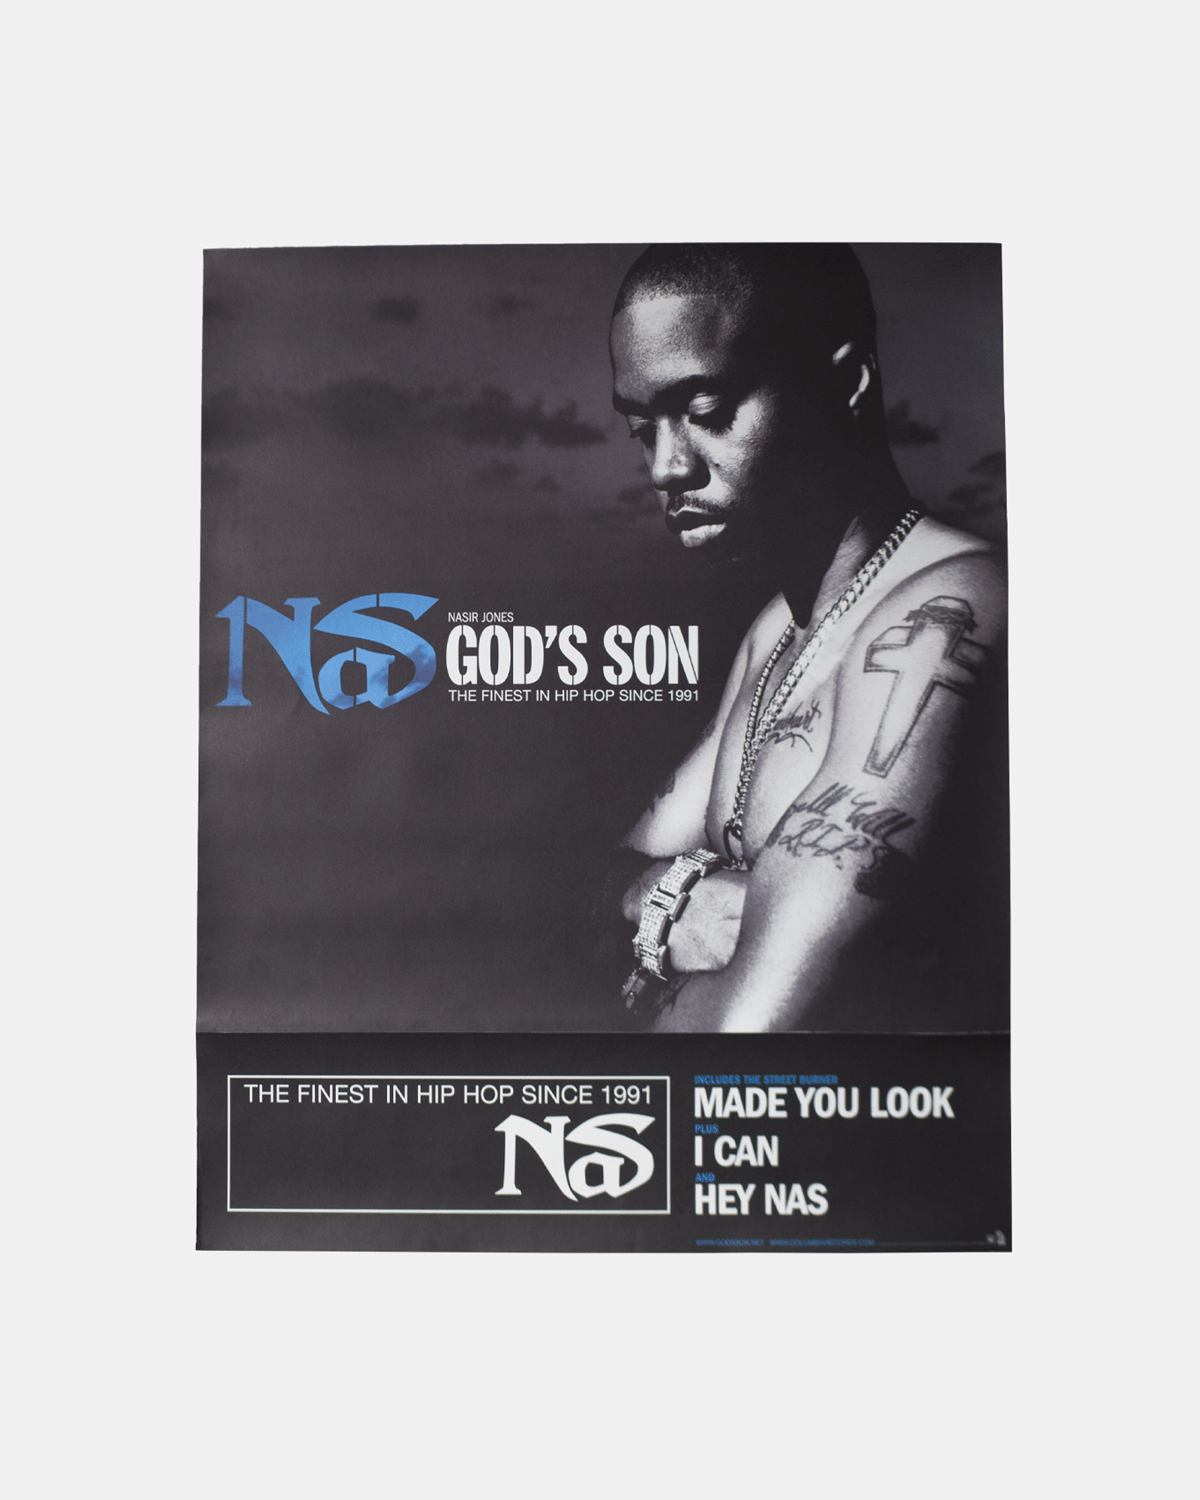 2002's Nas 